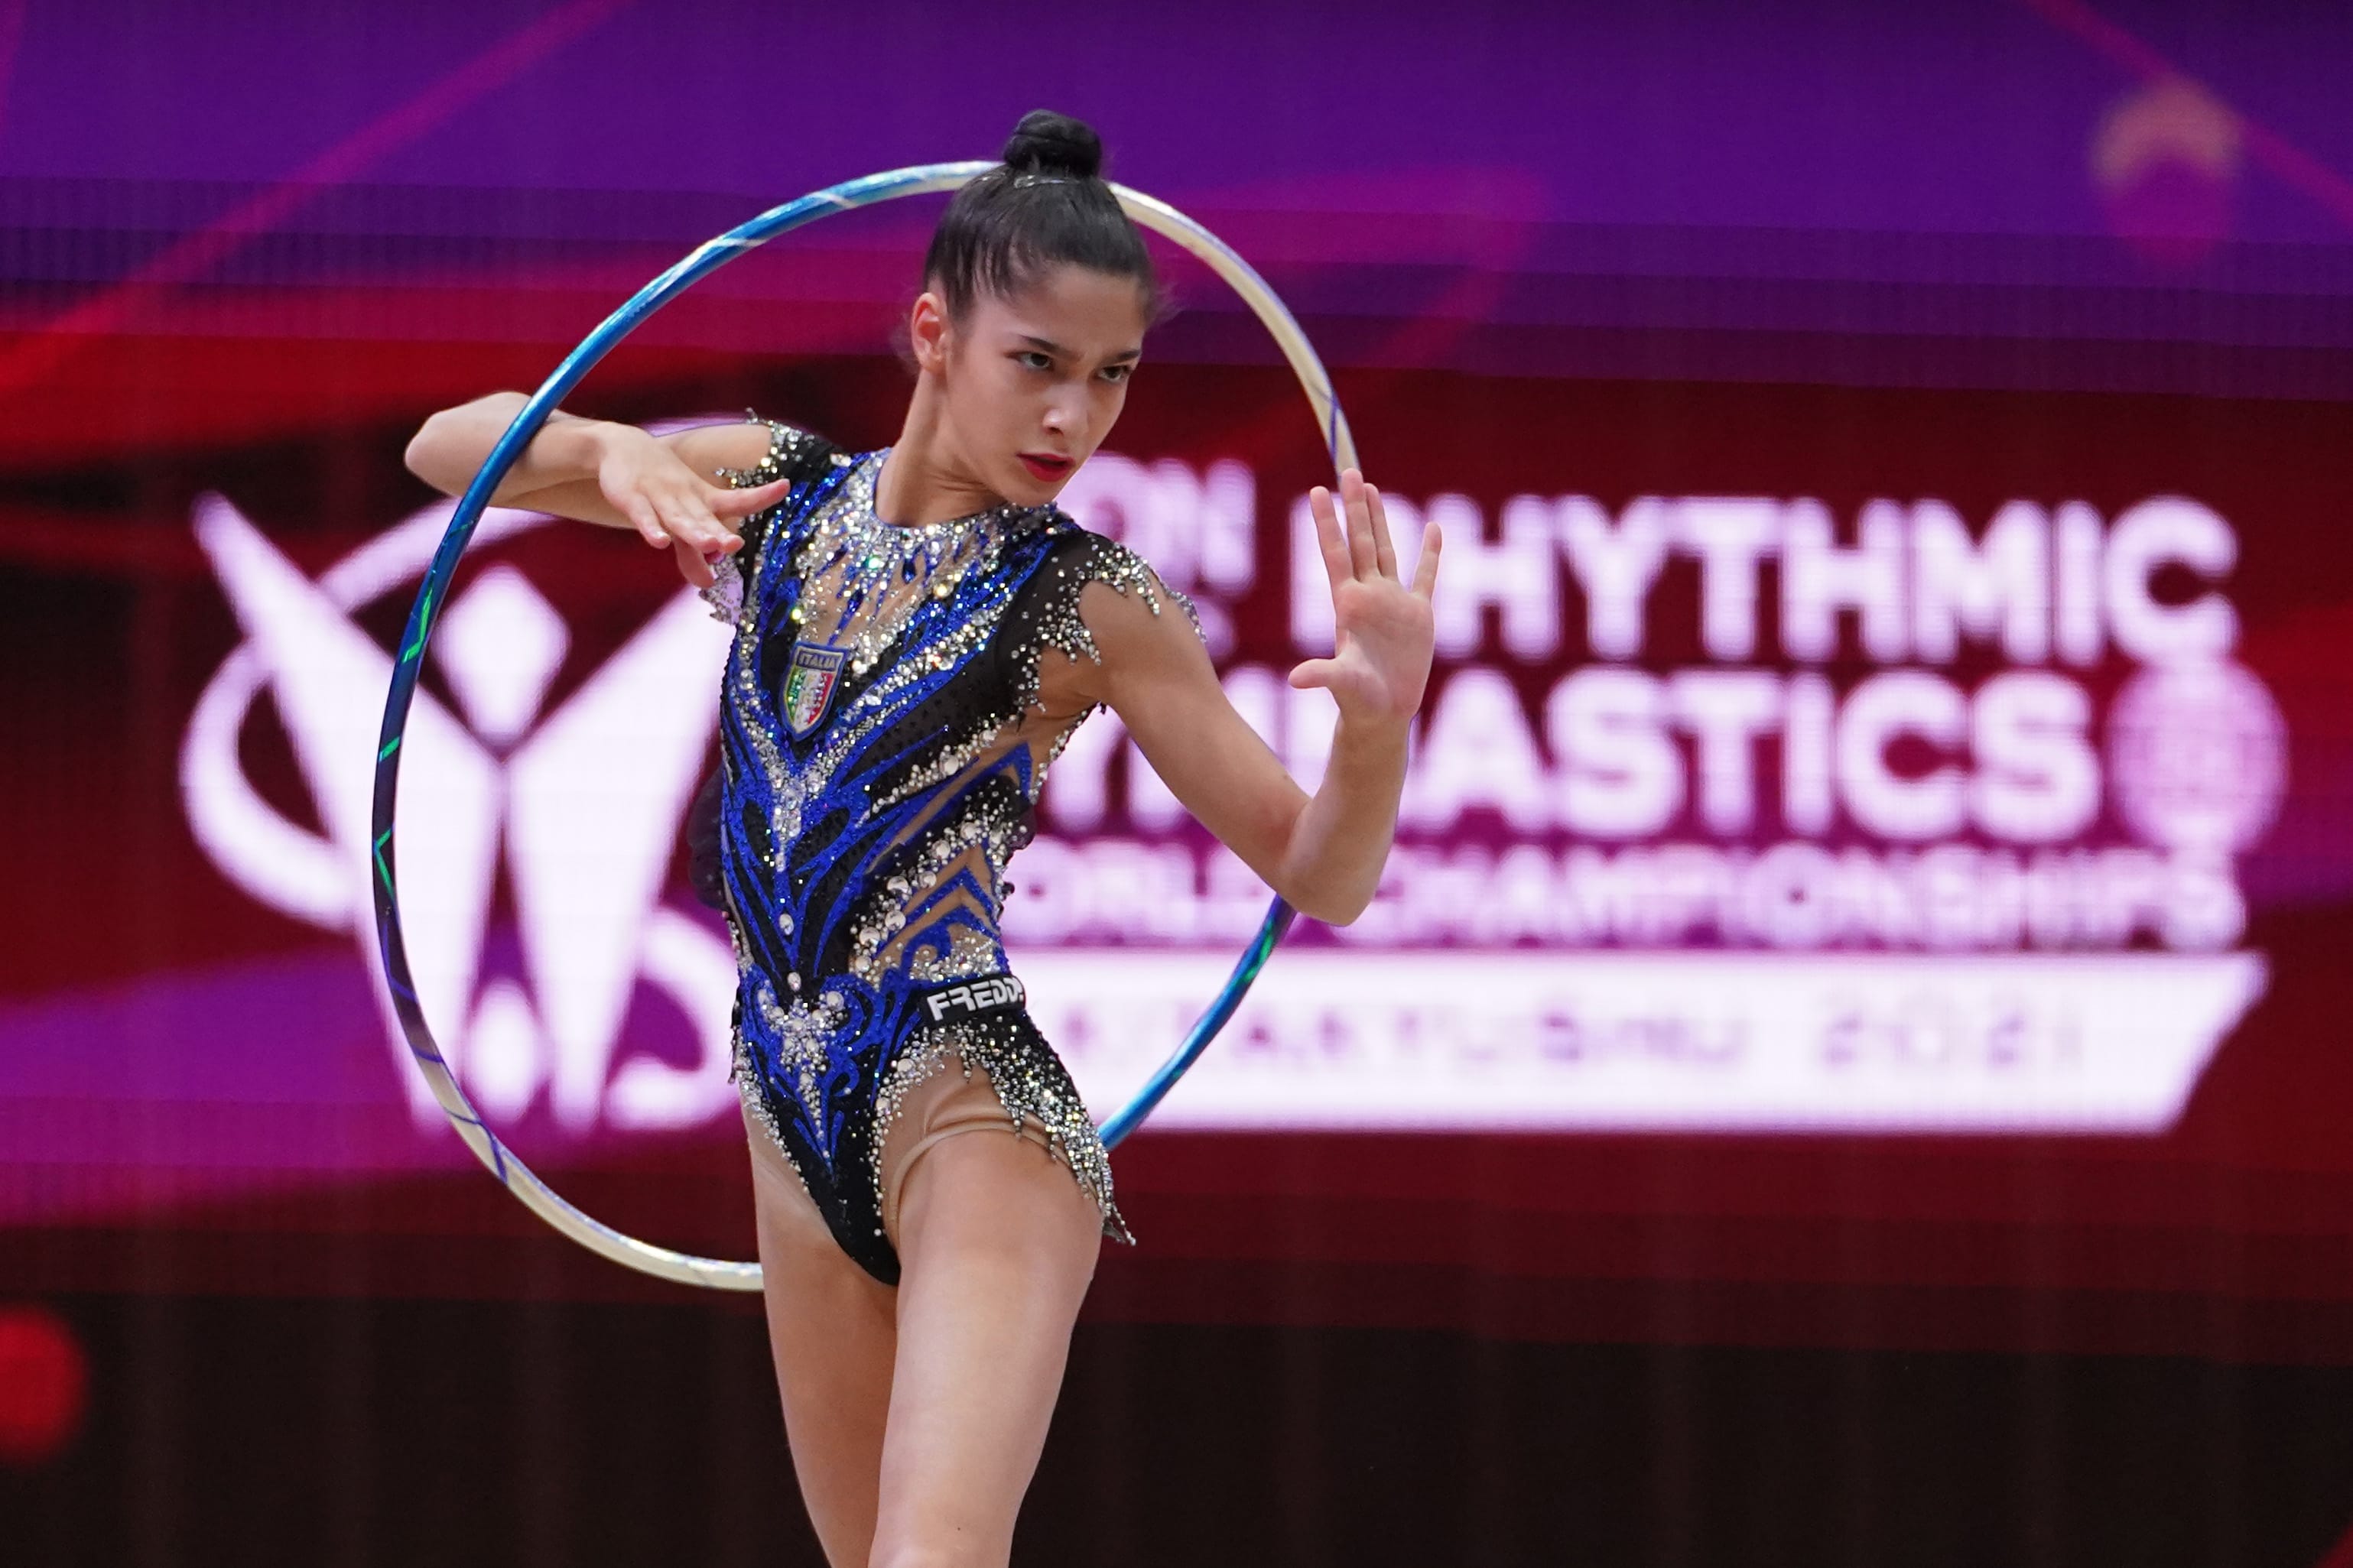 2022 European Rhythmic Gymnastics Championships Preview, schedule, and how to watch rising stars Kaleyn, Baldassarri, and Raffaeli live